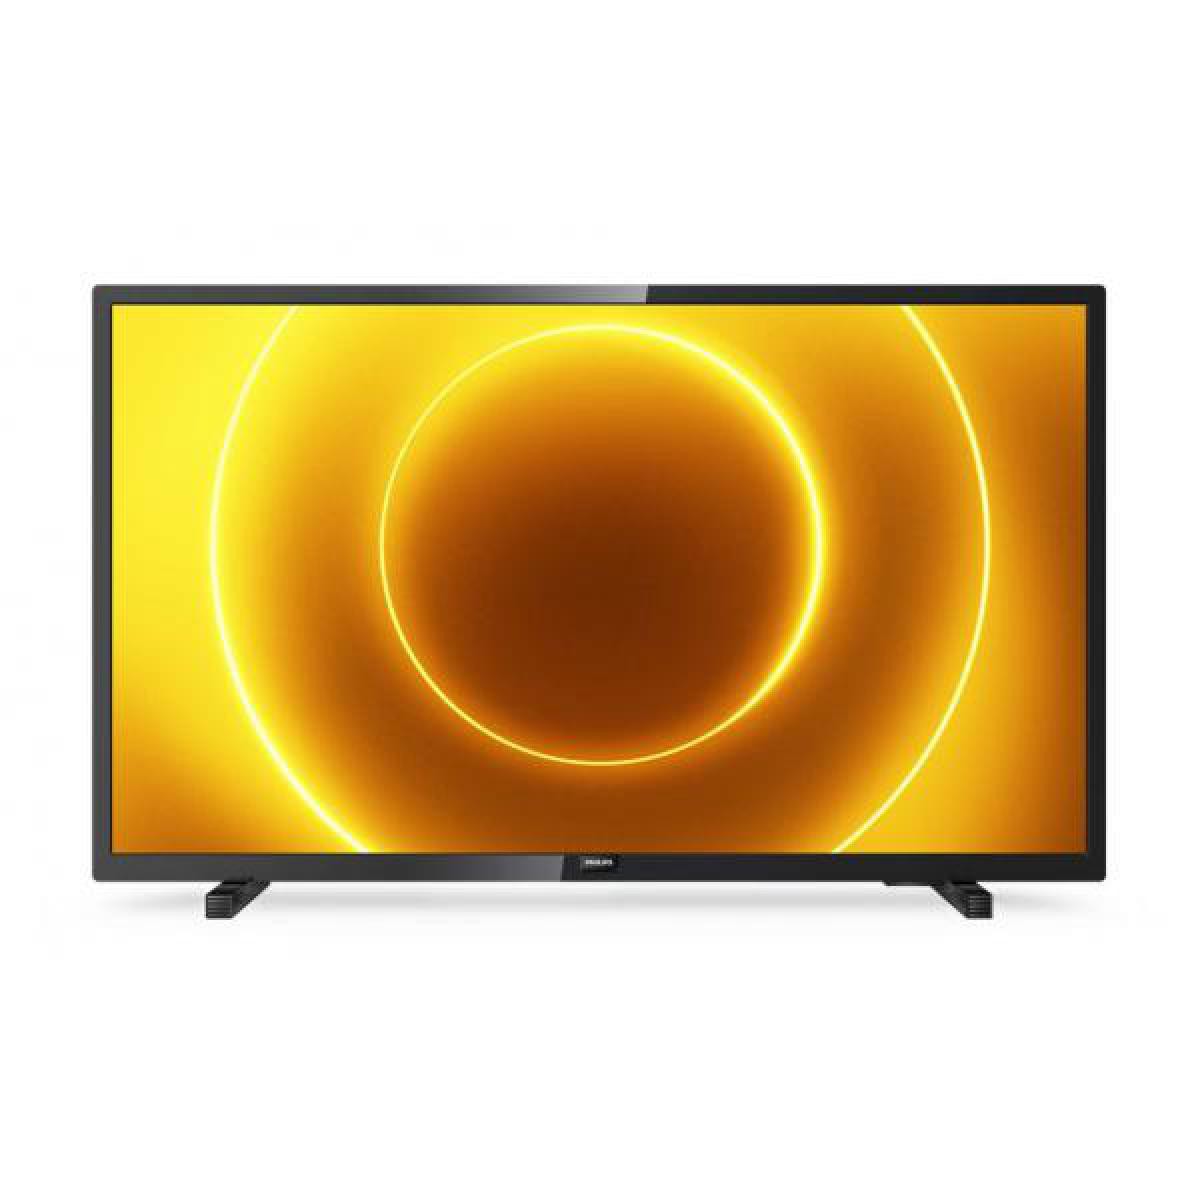 Philips - PHILIPS 43PFS5525/12 TV LED FULL HD - 43 (108cm) - Pixel Plus HD - Smart TV - 2xHDMI - 1xUSB - Classe énergétique A+ - TV 40'' à 43''